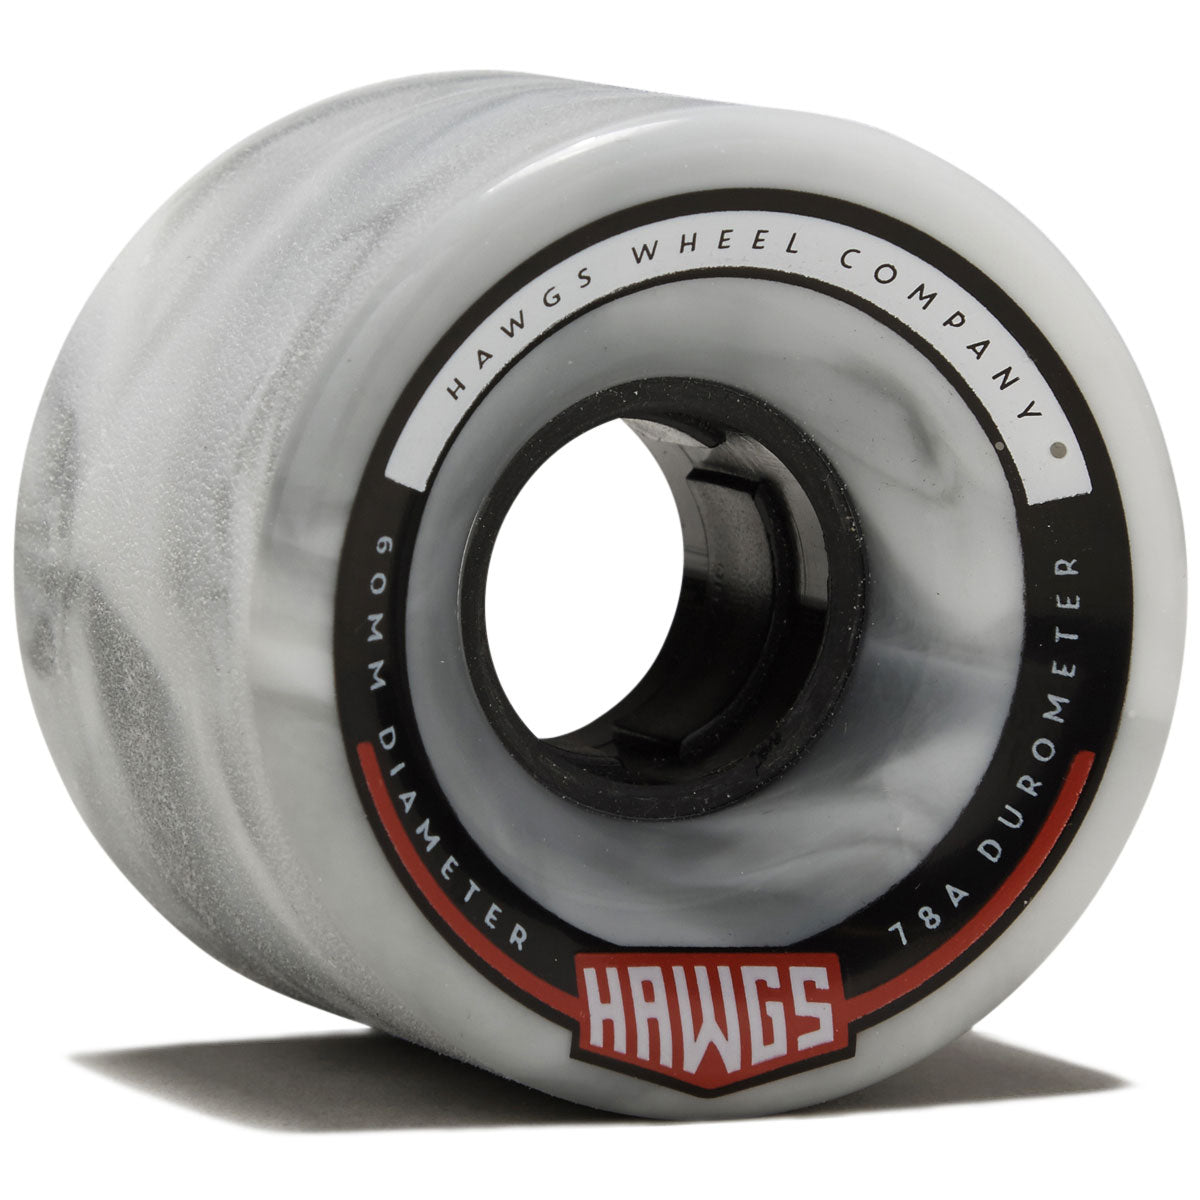 Hawgs Chubby 78a Stone Ground Longboard Wheels - Grey/White - 60mm image 1